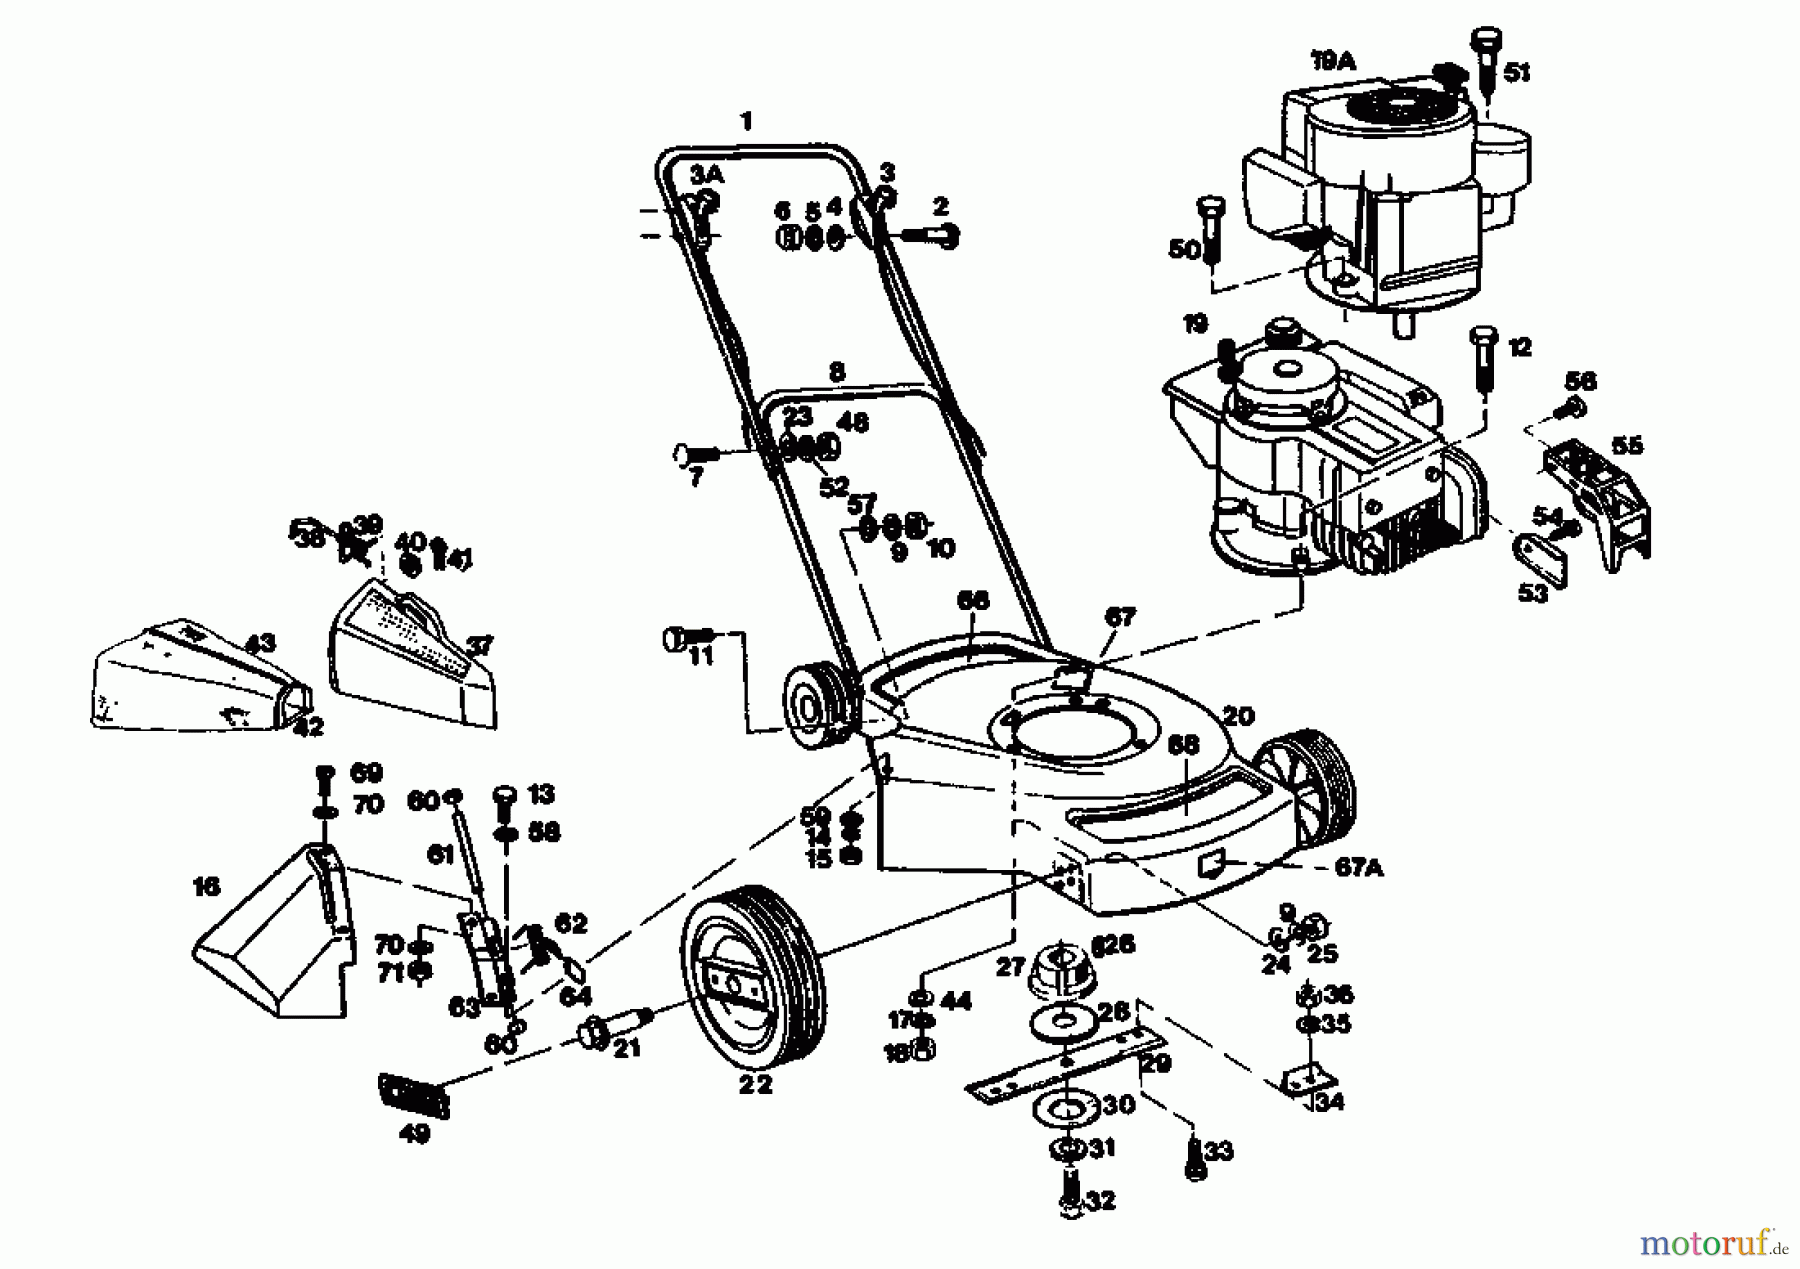  Gutbrod Petrol mower TURBO 45 SB-B 02894.02  (1986) Basic machine